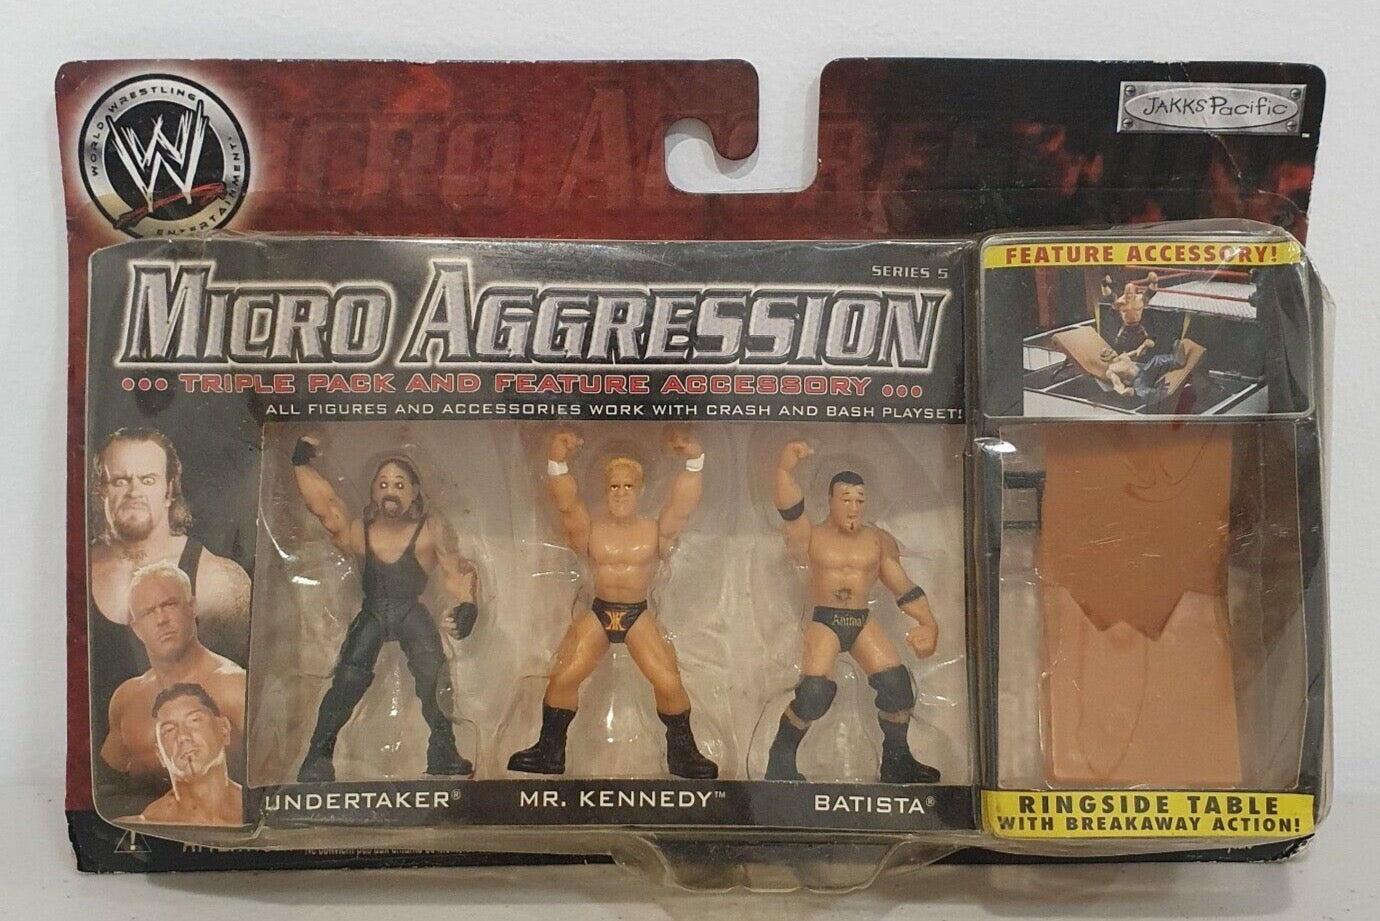 2007 WWE Jakks Pacific Micro Aggression Series 5 Undertaker, Mr. Kennedy & Batista